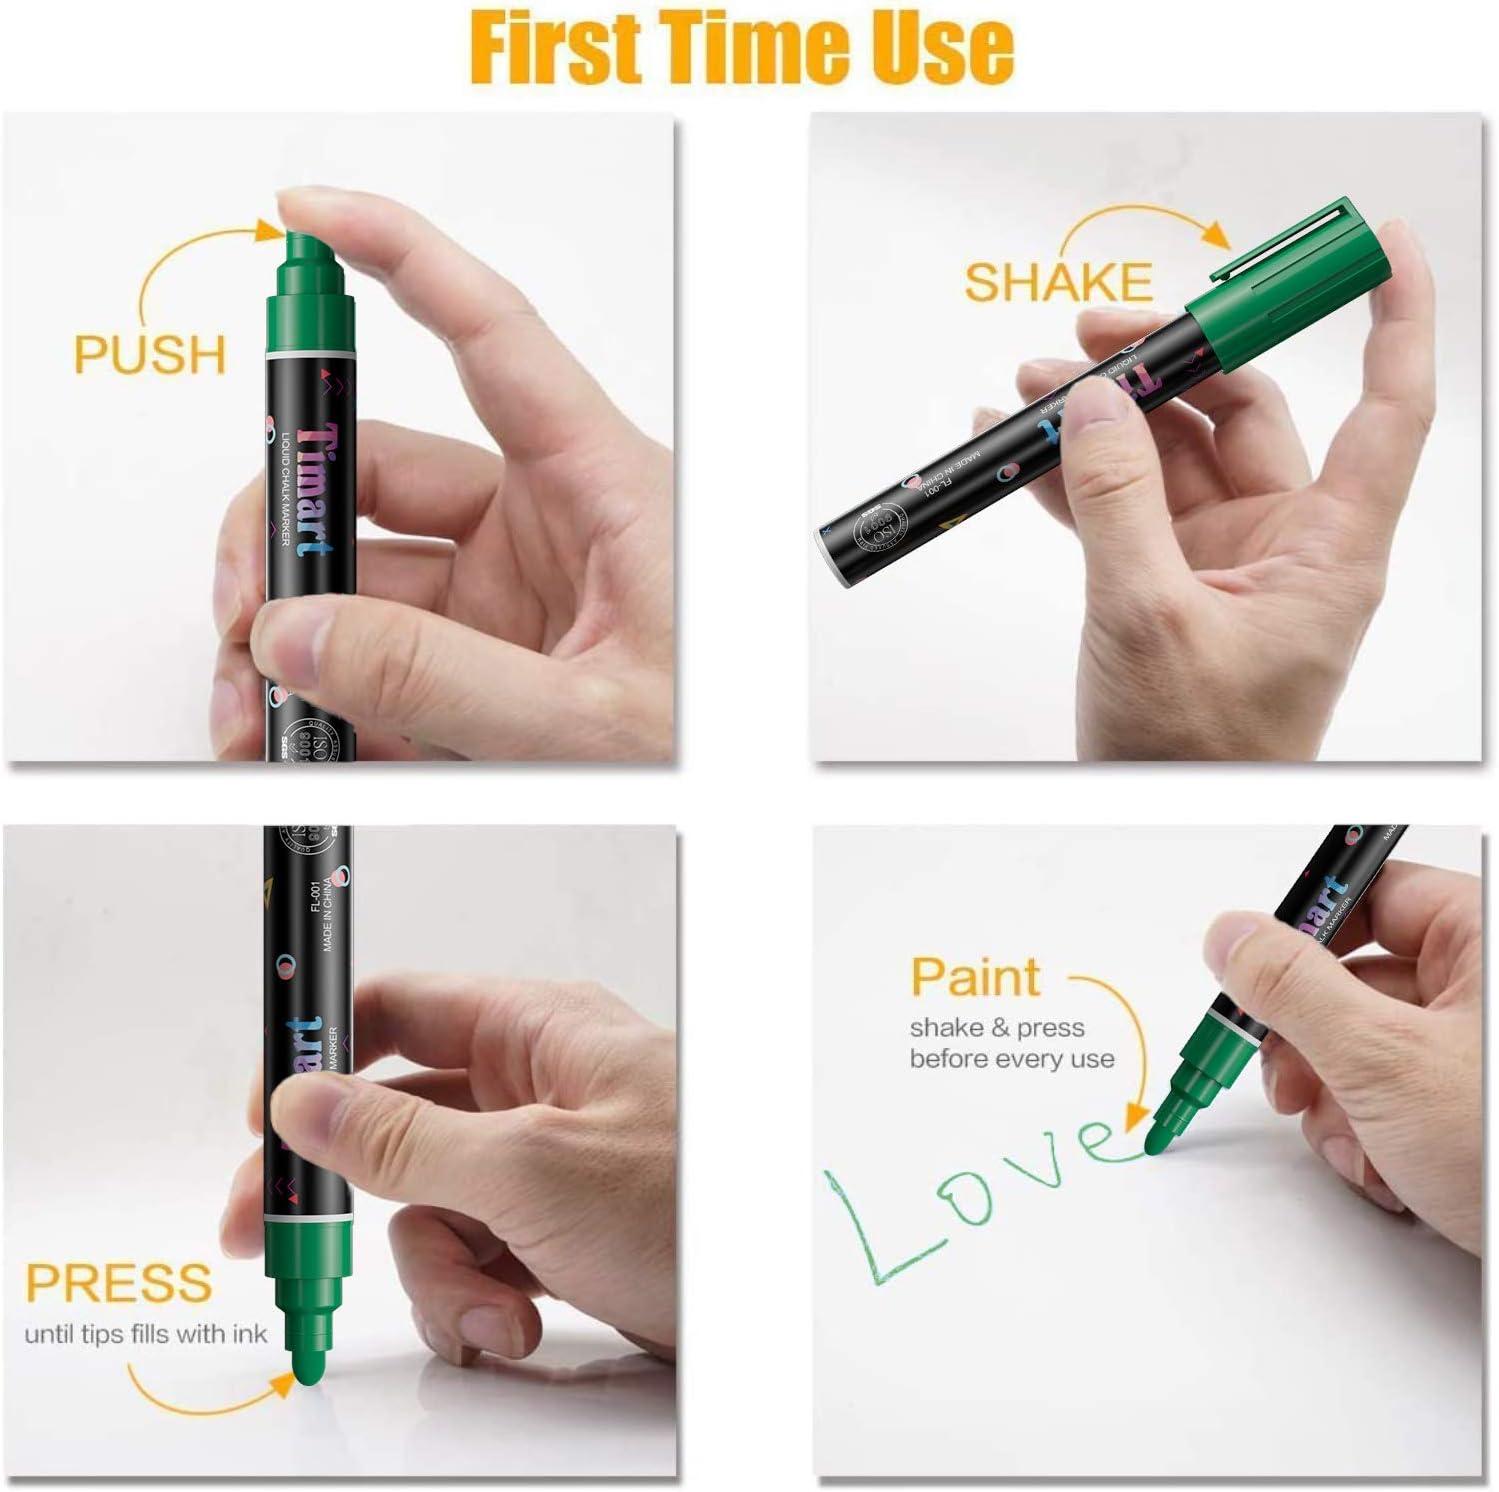 Liquid Chalk Marker Pen - White, Dry Erase for Chalkboard Signs, Windows, Blackboard, Glass with 24 Chalkboard Labels Included (6 Pack) 3-6mm